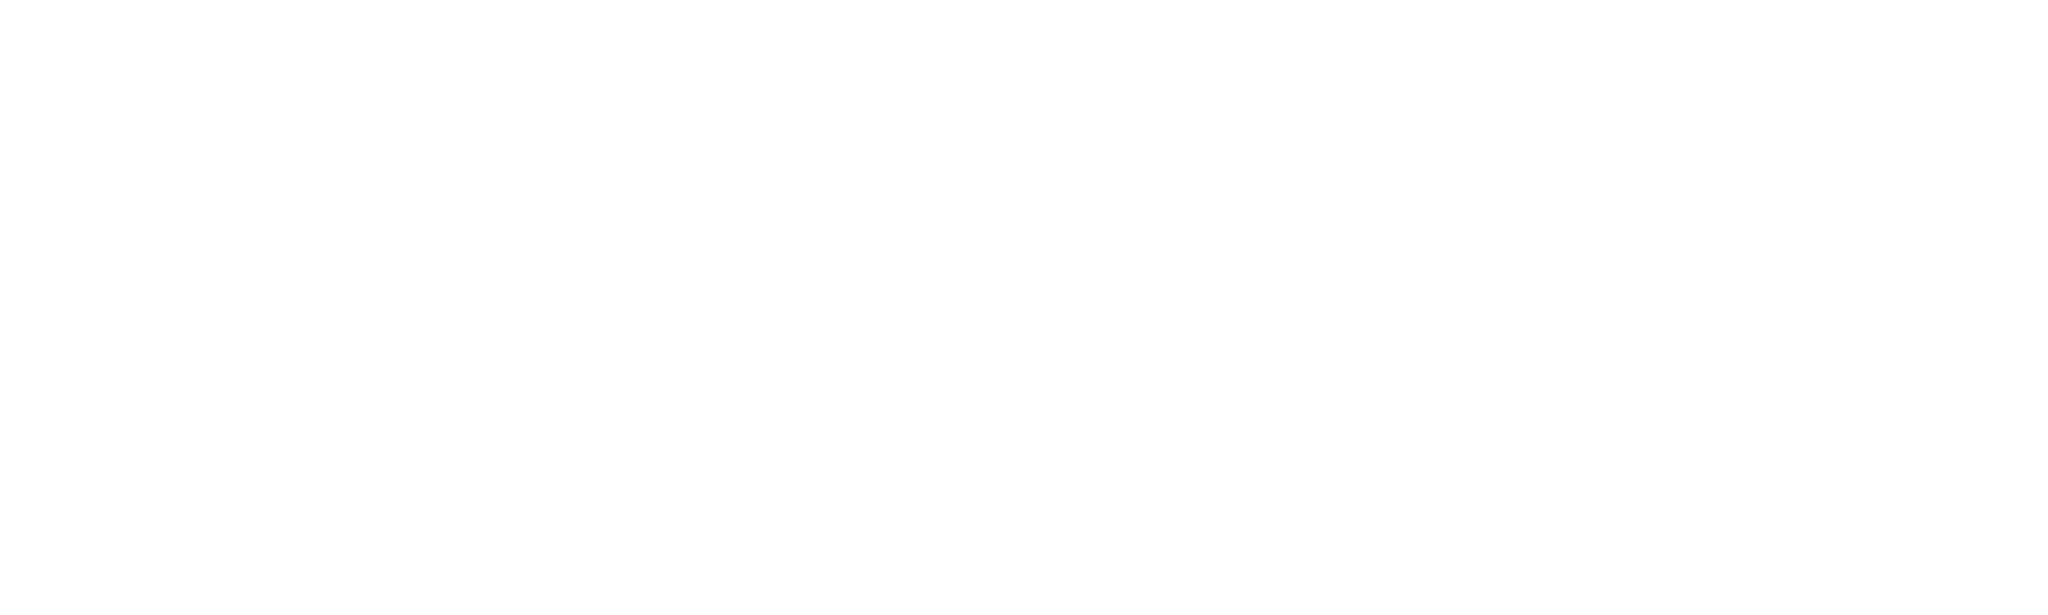 hiawathad logo